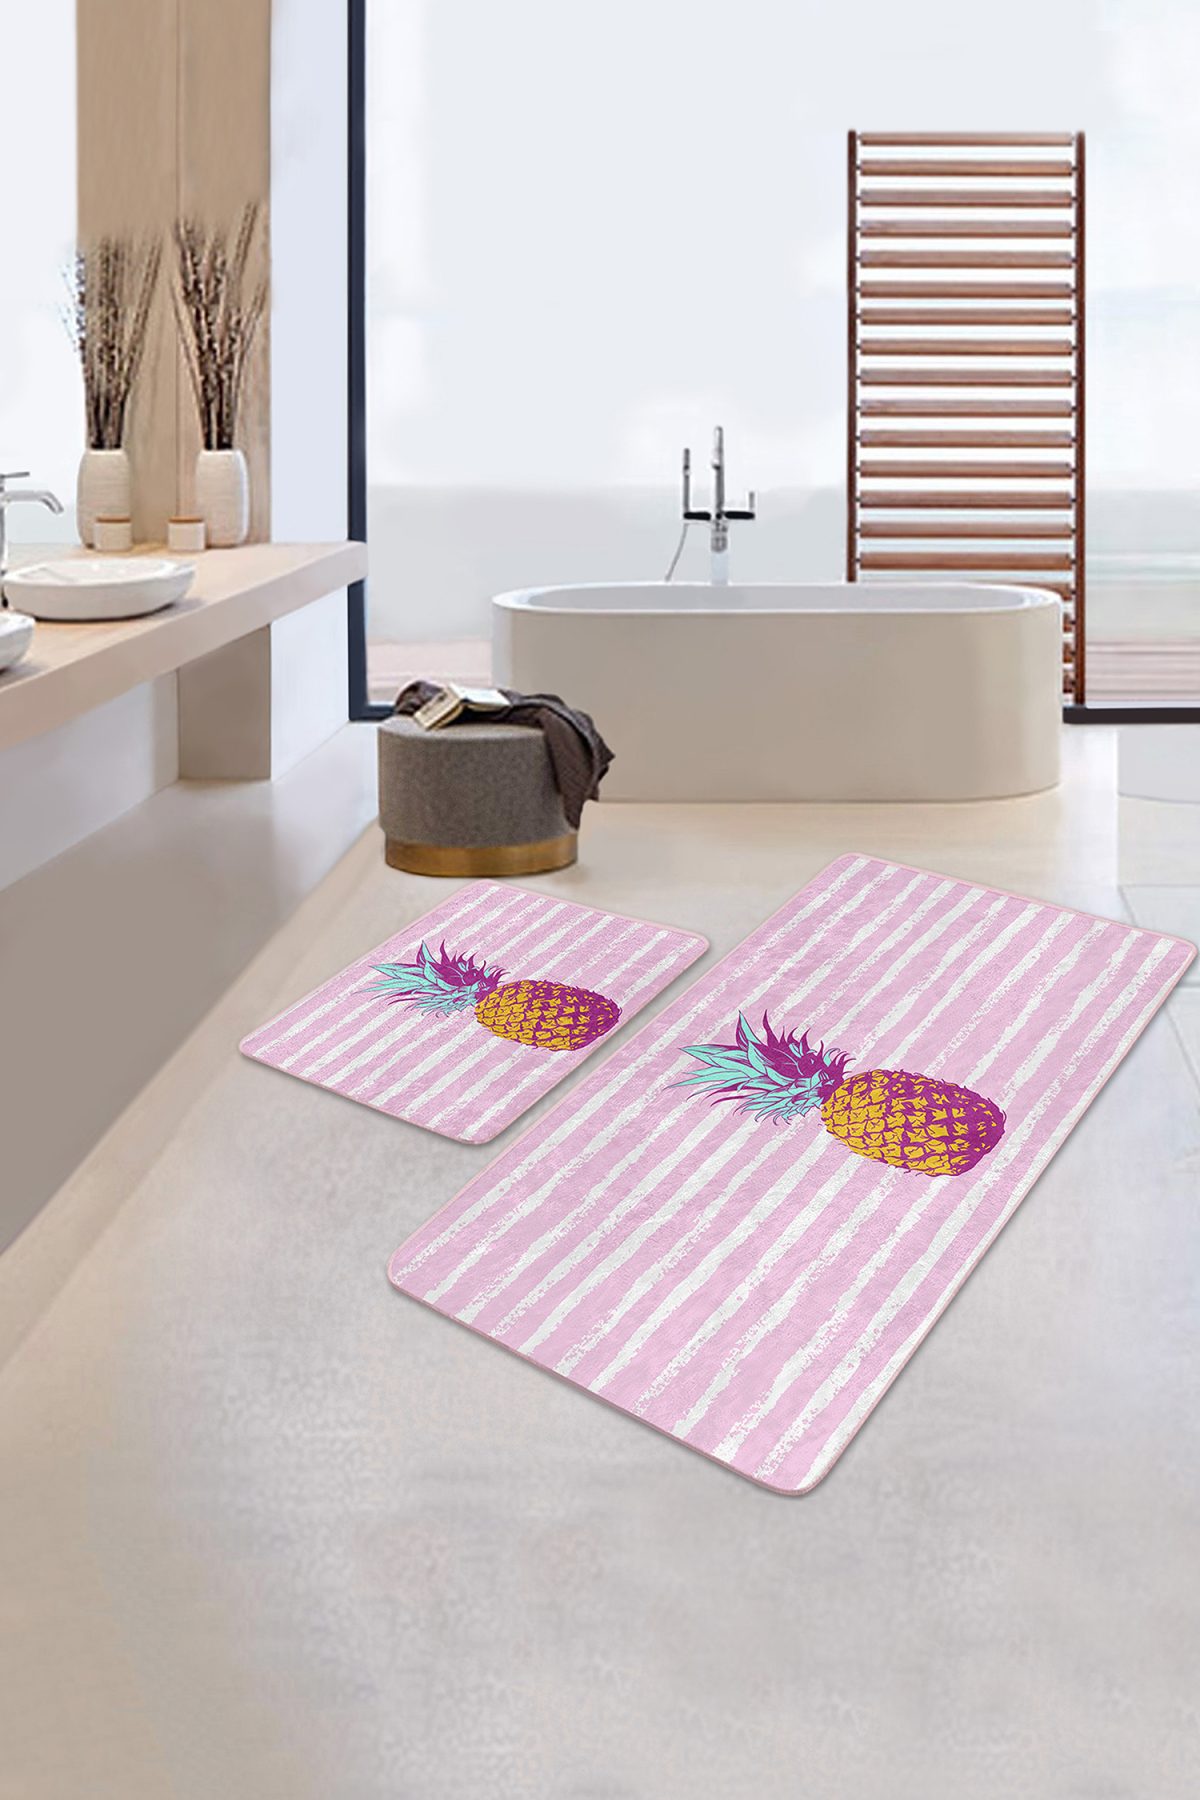 Pembe Düz Çizgili Ananas Motifli 2'li Kaymaz Tabanlı Banyo & Mutfak Paspas Takımı Realhomes